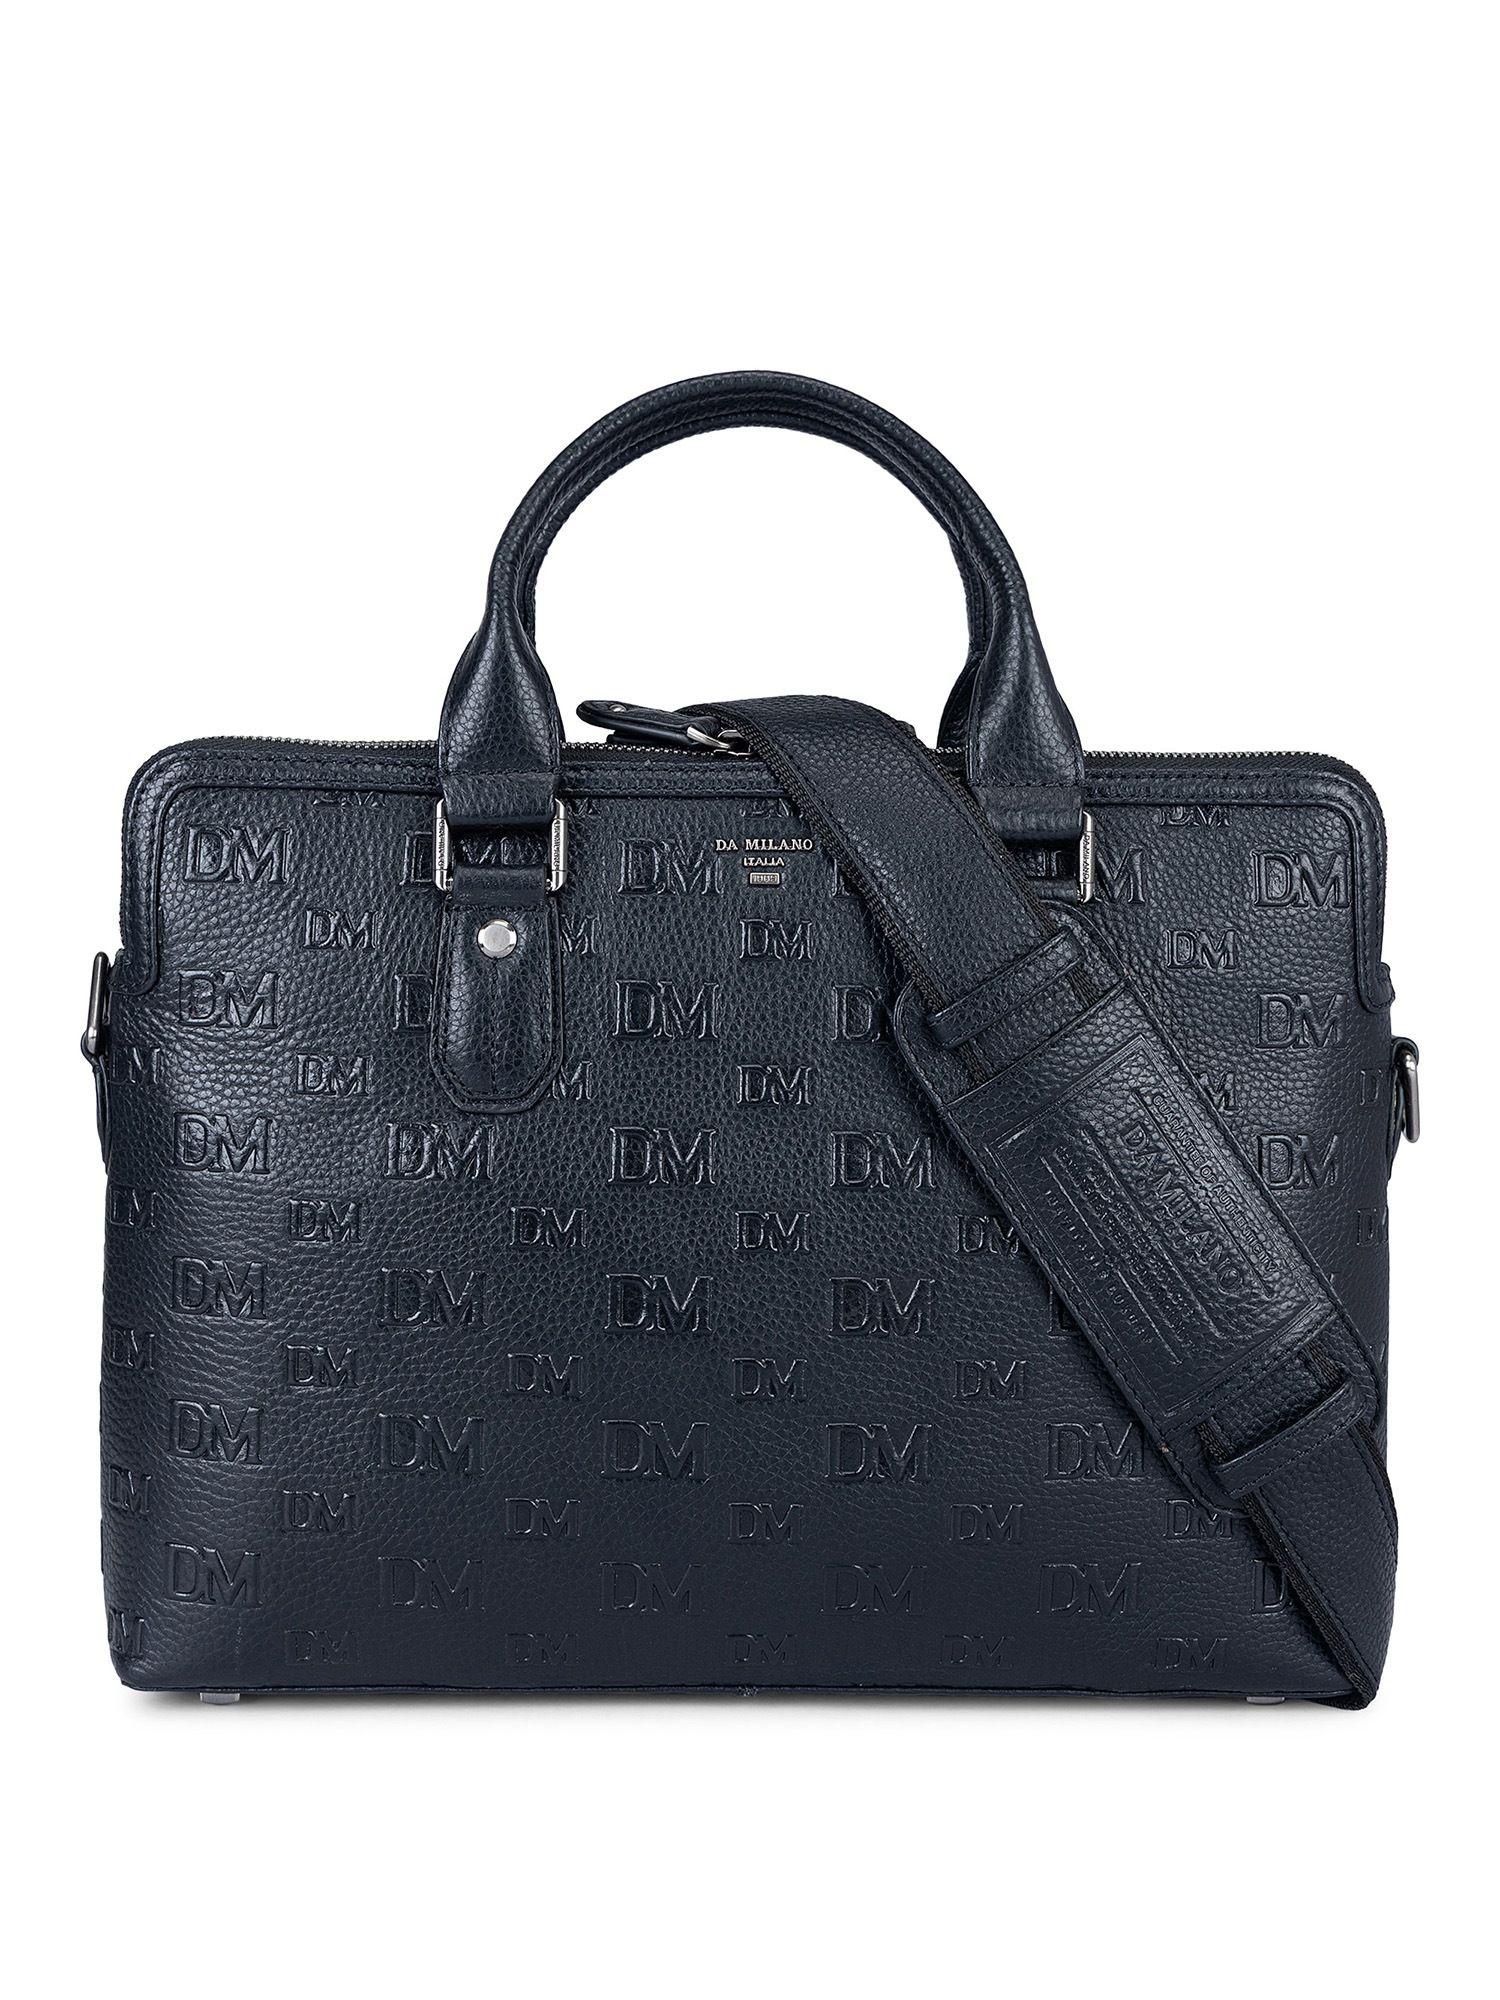 genuine leather black laptop bag upto 13 inch